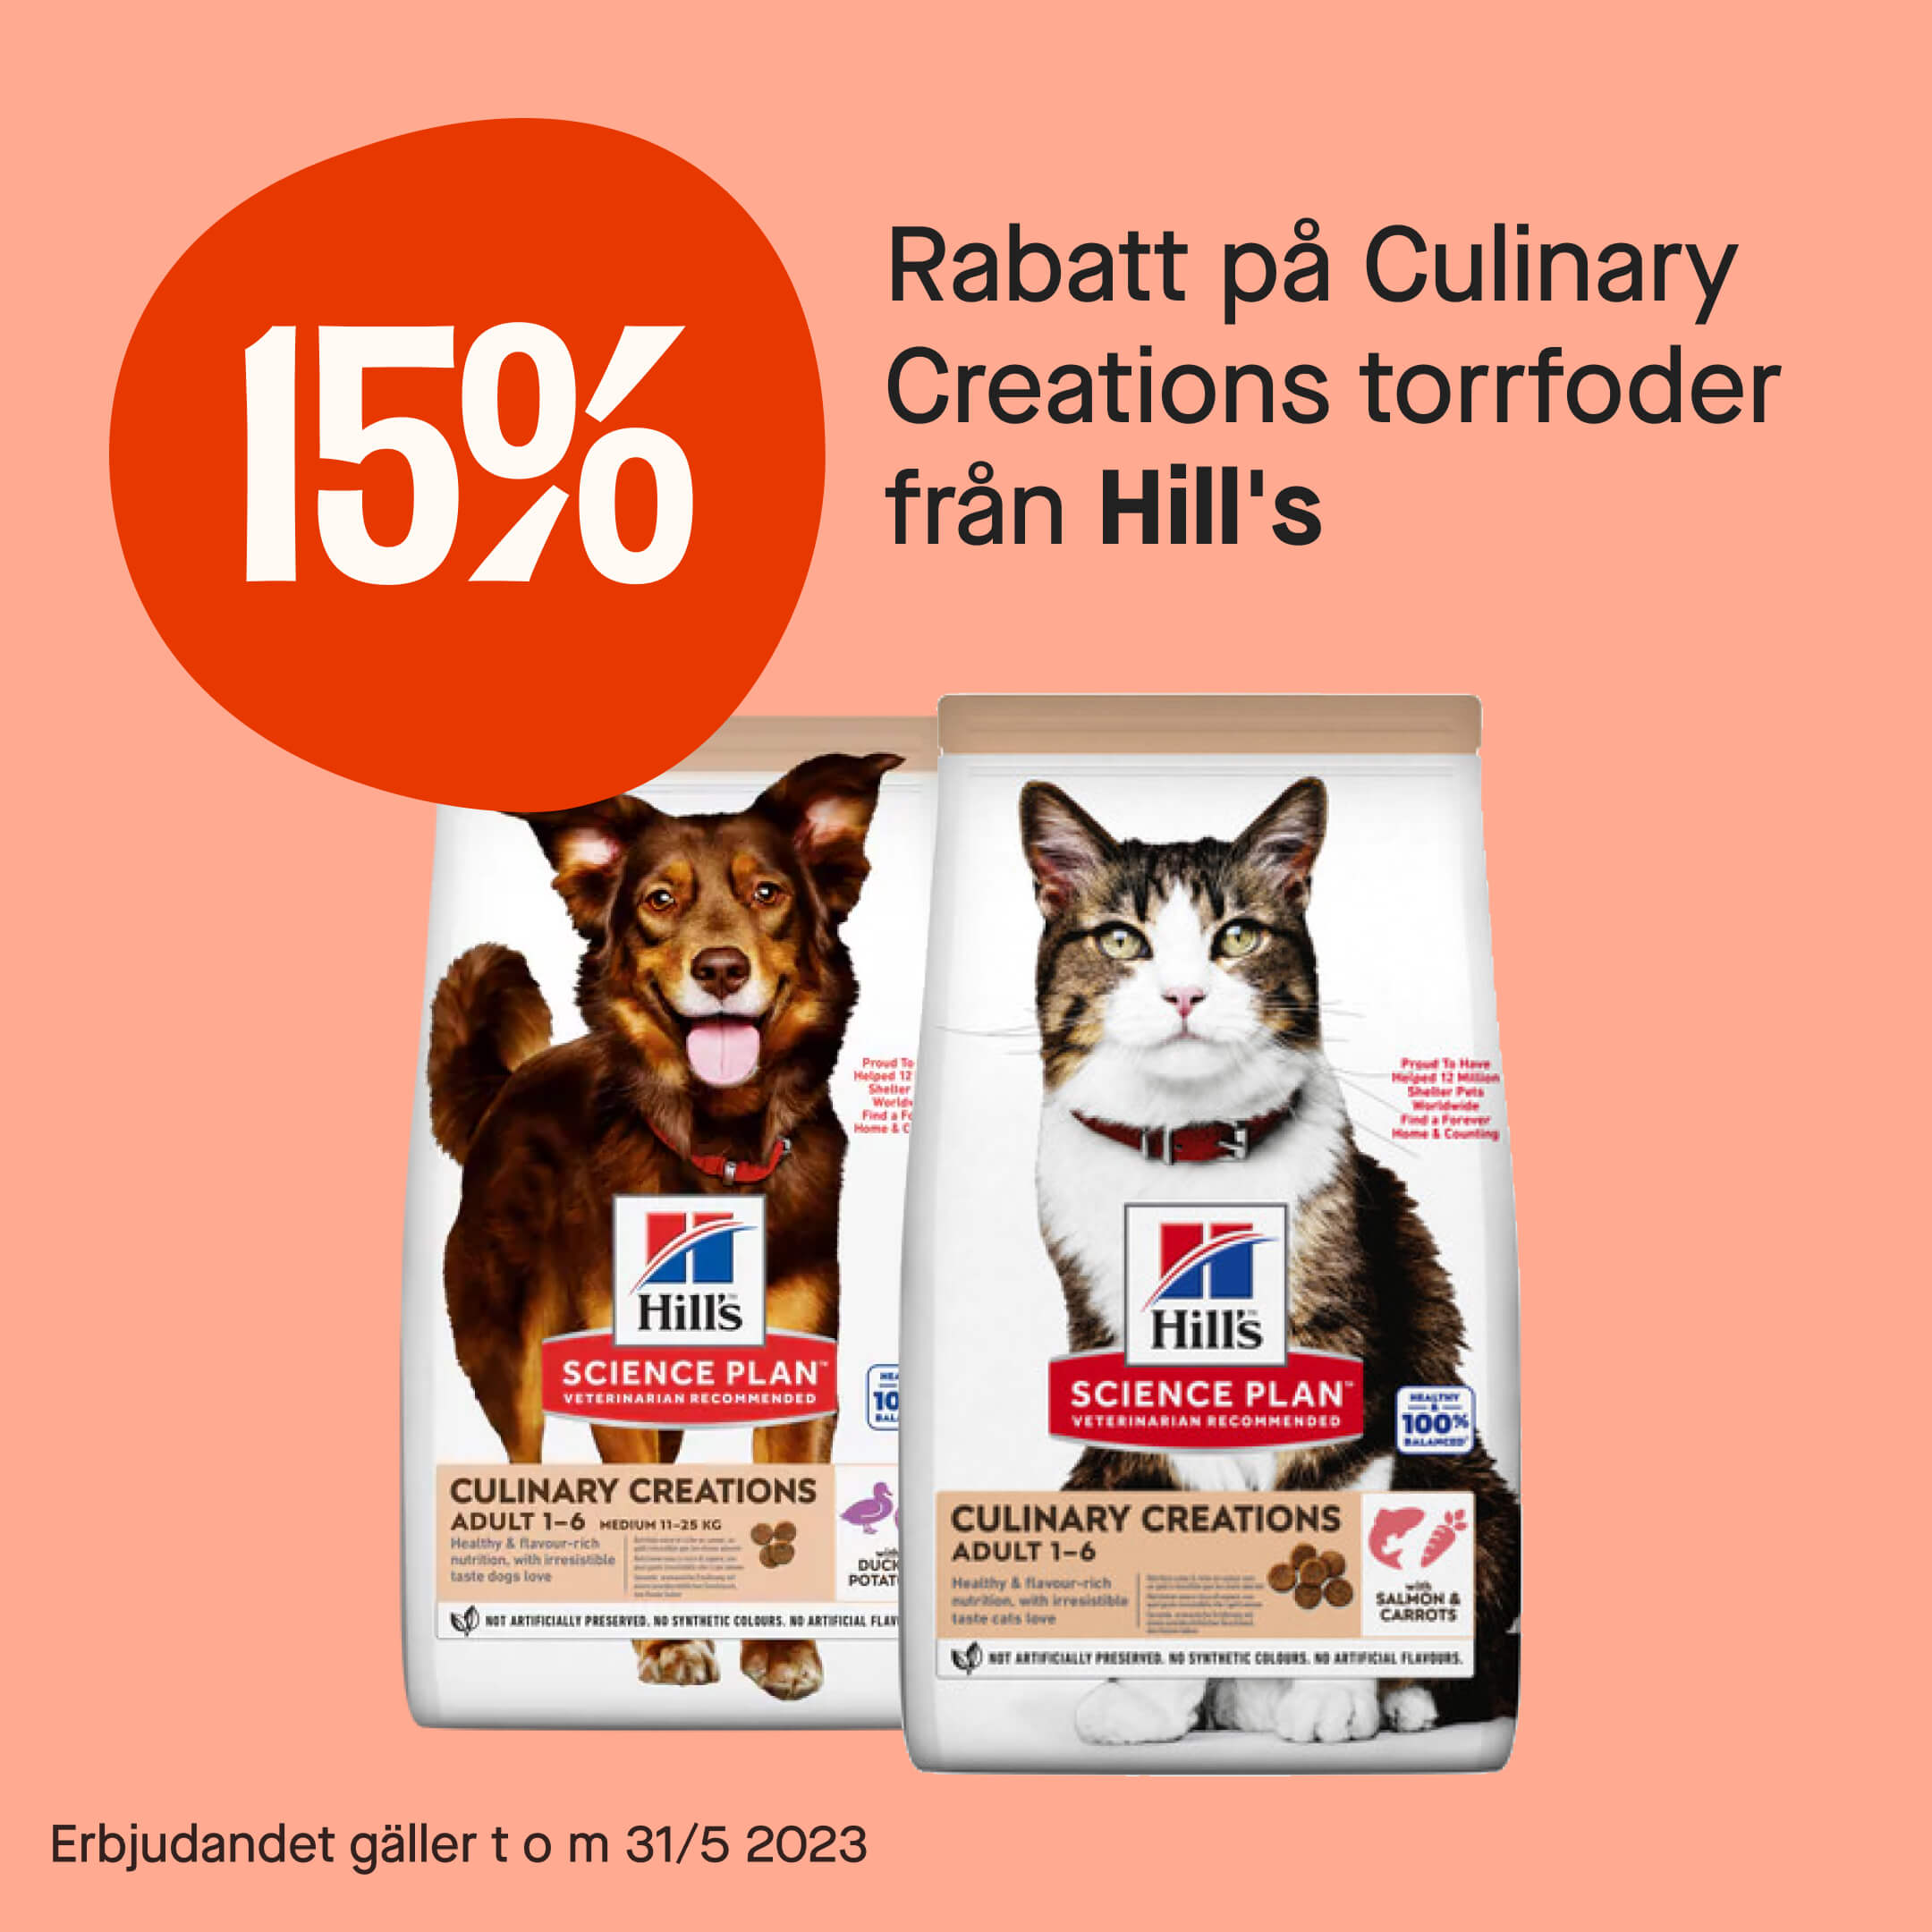 15% Culinary Creations torrfoder från Hill's